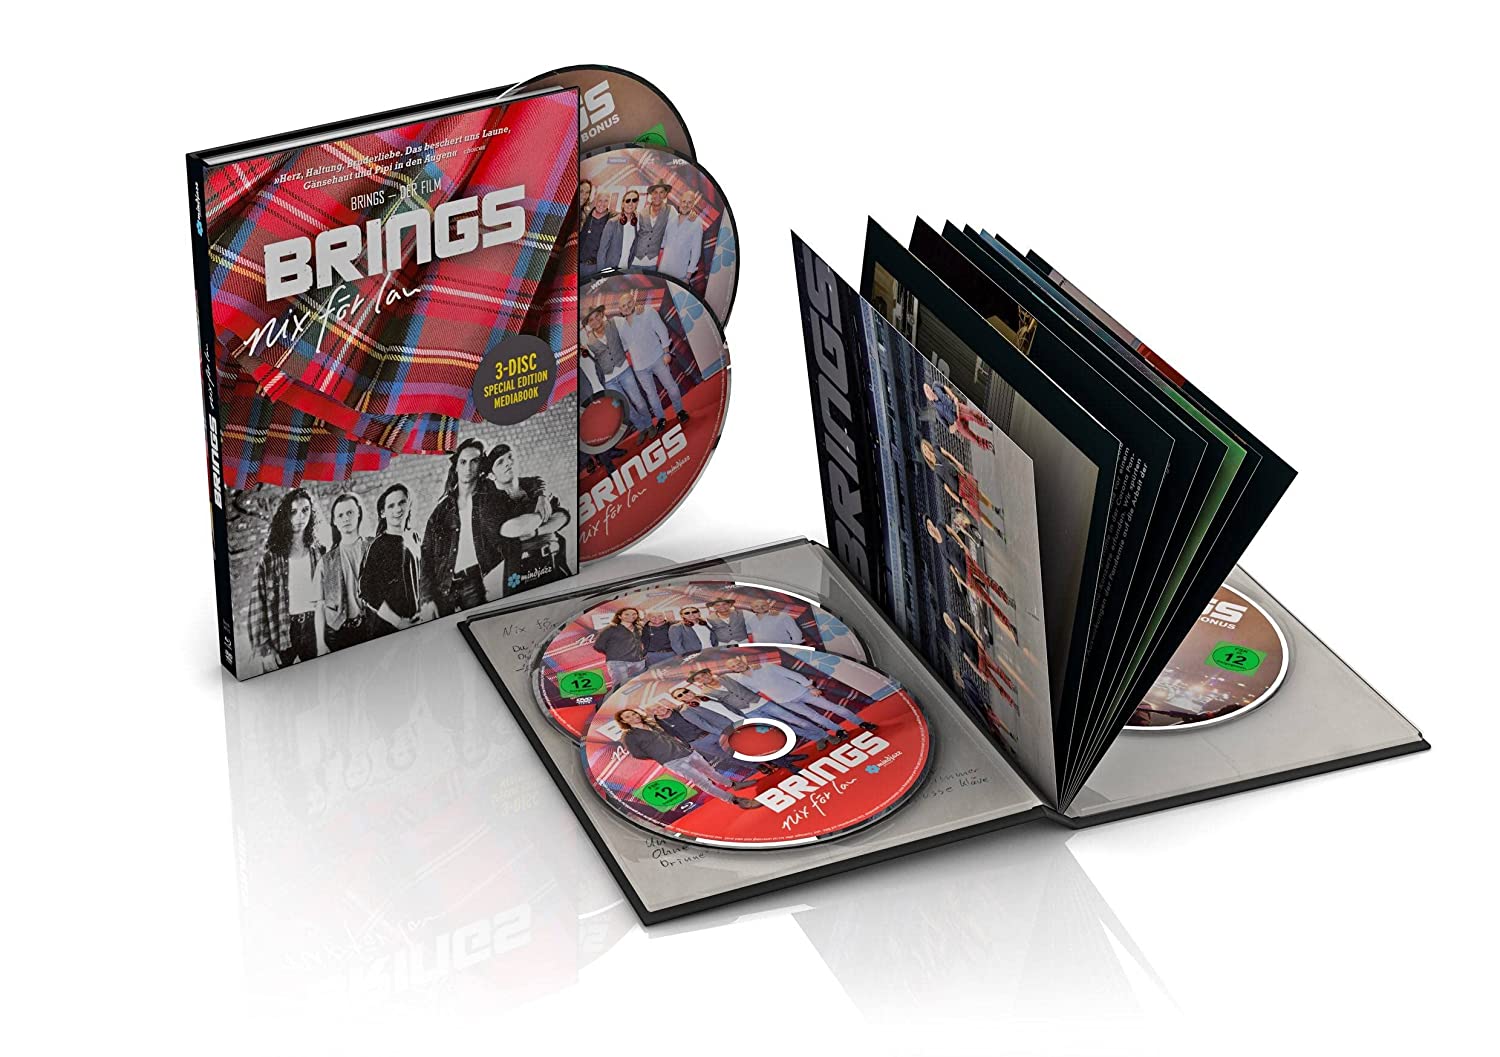 BRINGS - nix för lau (Special Edition Mediabook) (DVD + Blu-ray inkl. Bonus-DVD)